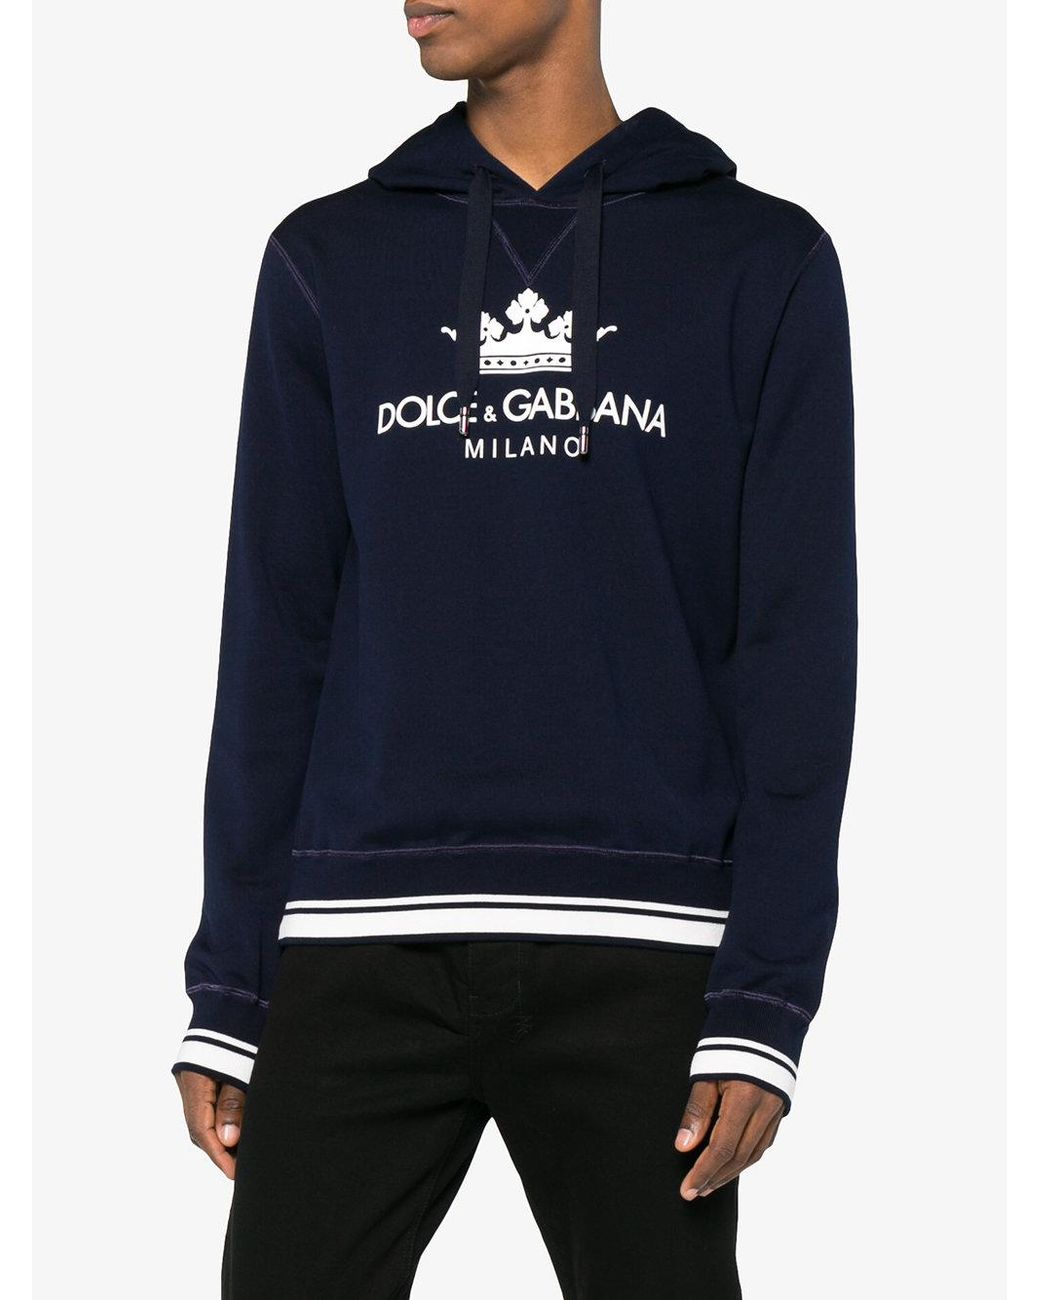 Dolce & Gabbana Milano Logo Hooded Sweatshirt in Blue for Men | Lyst Canada